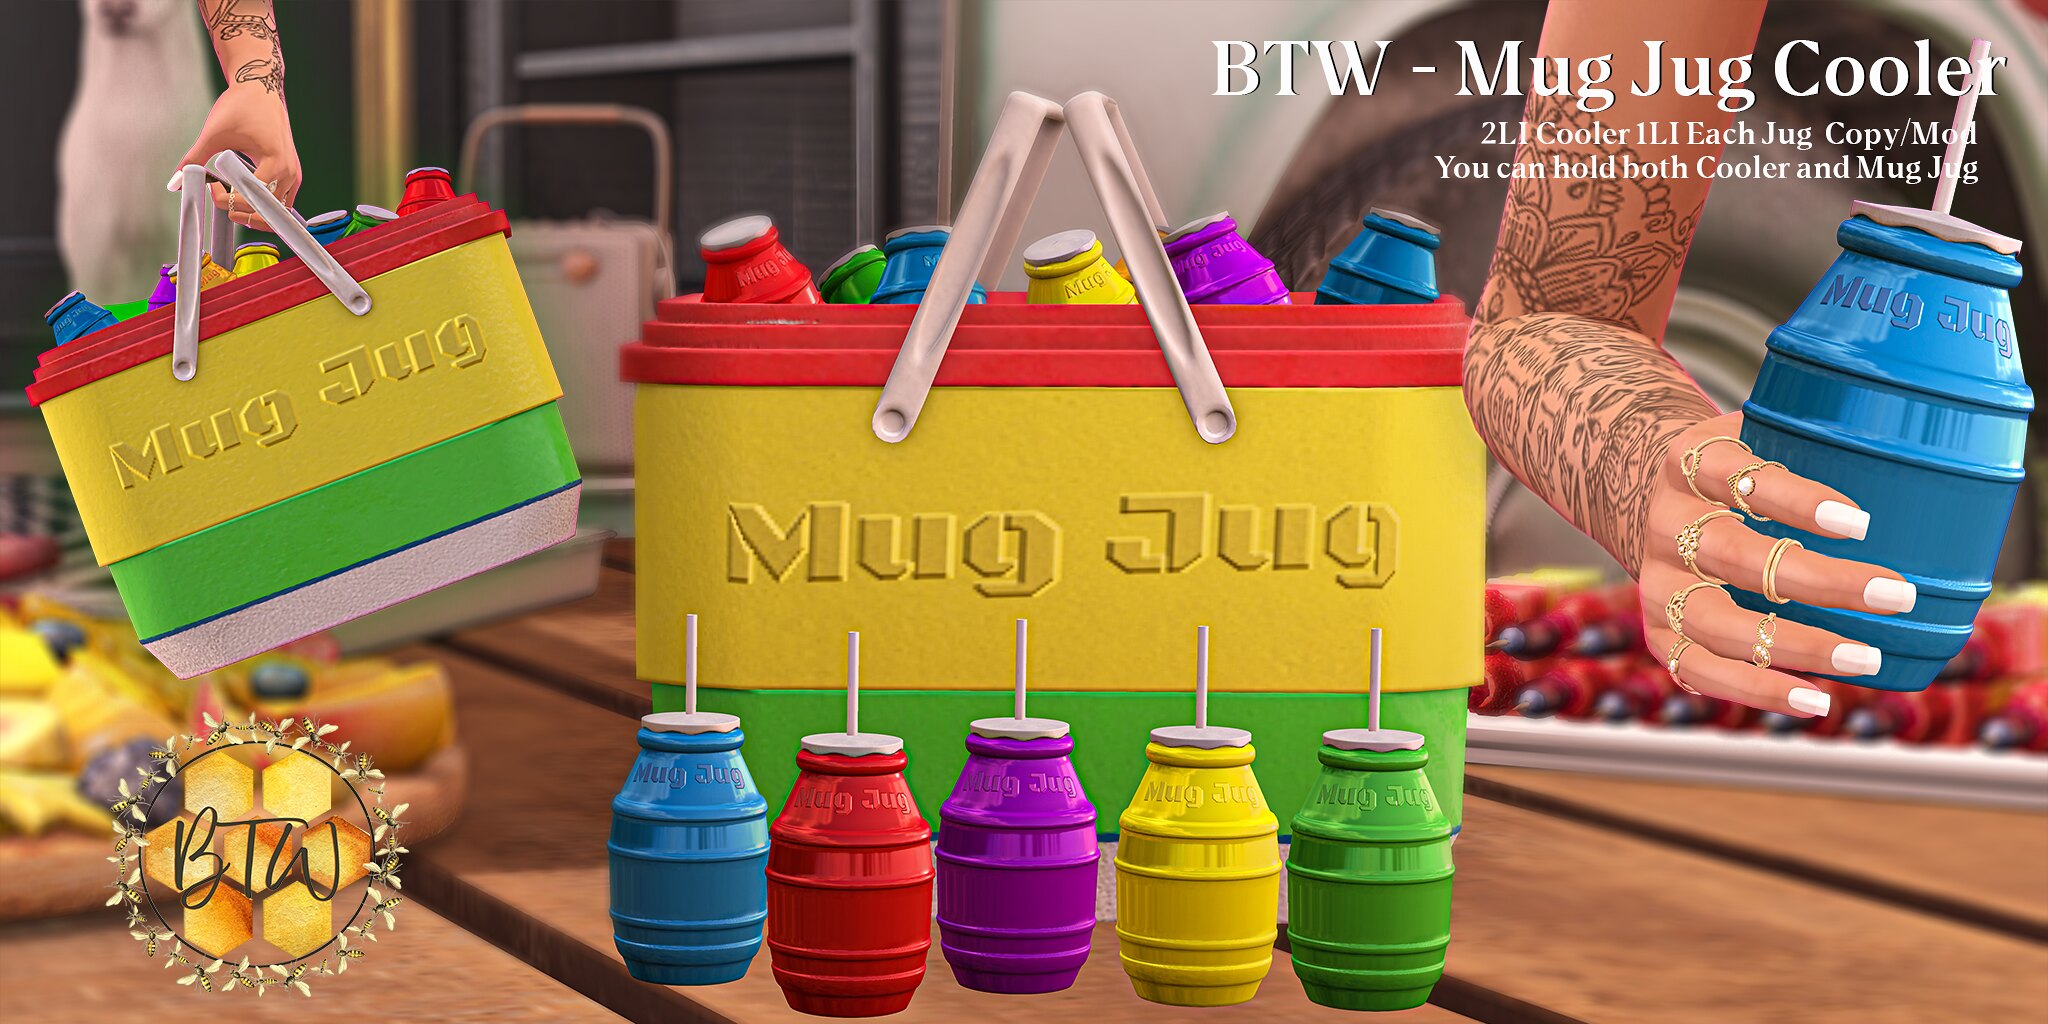 BTW – Mug Jug Cooler